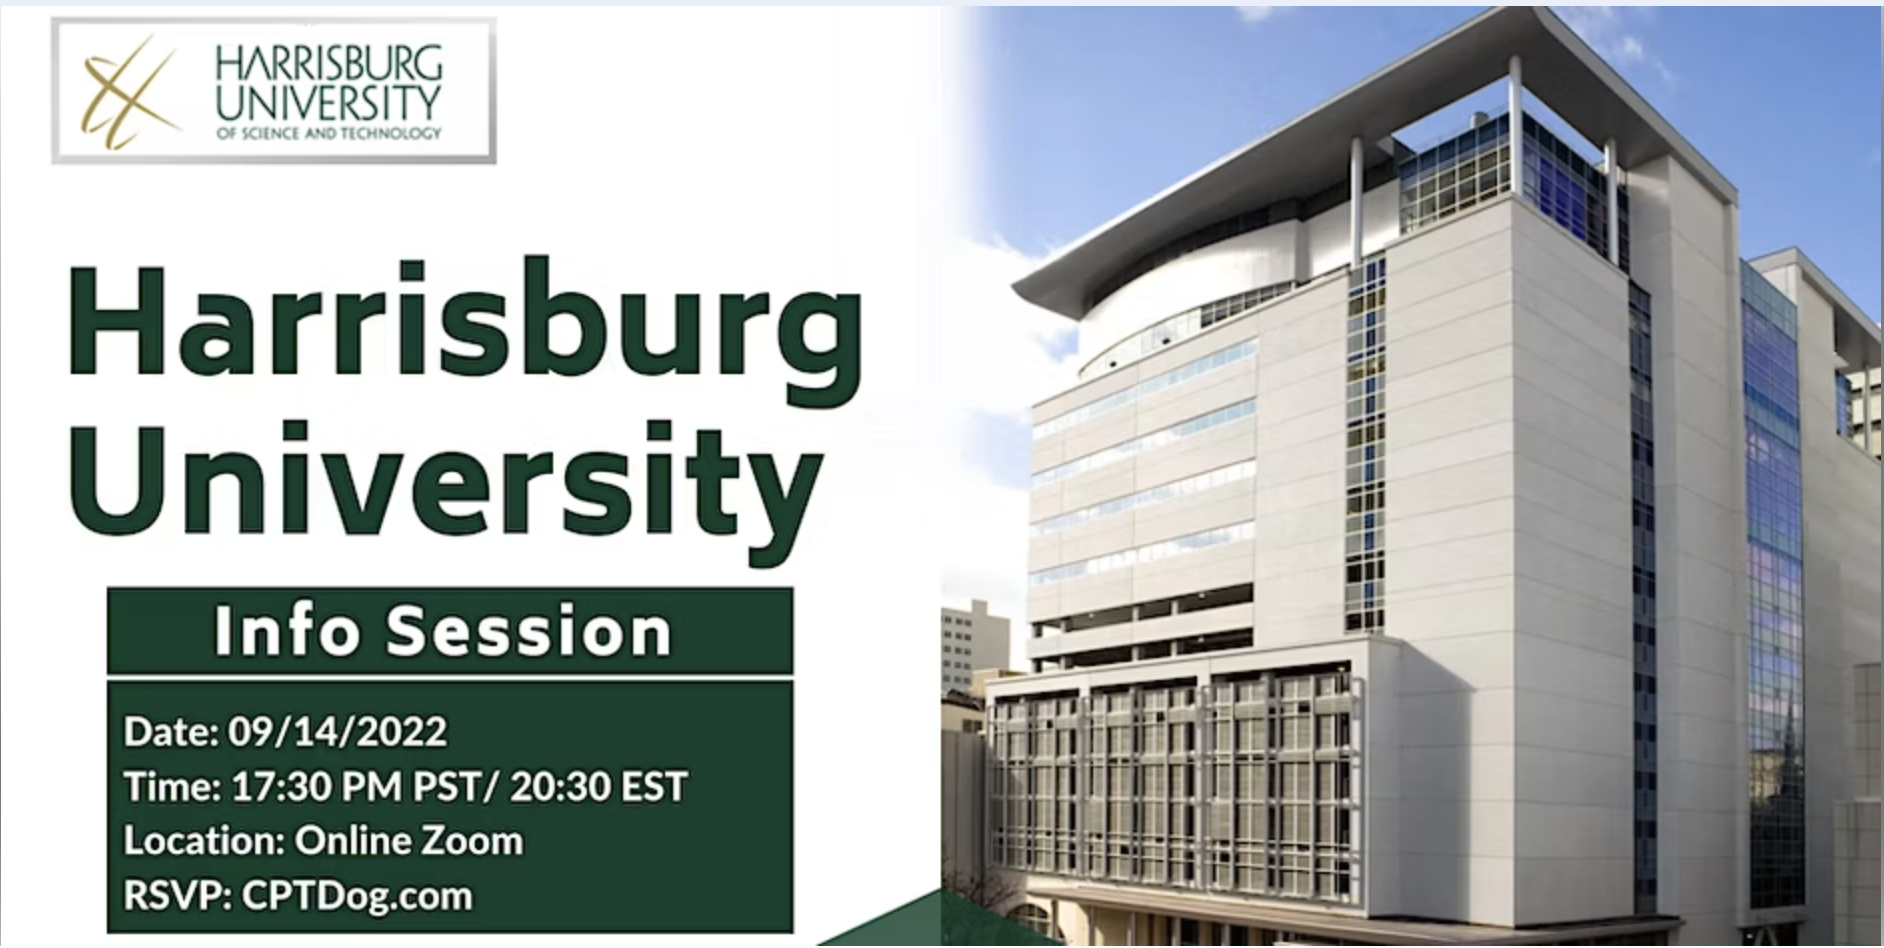  Harrisburg University Info Session